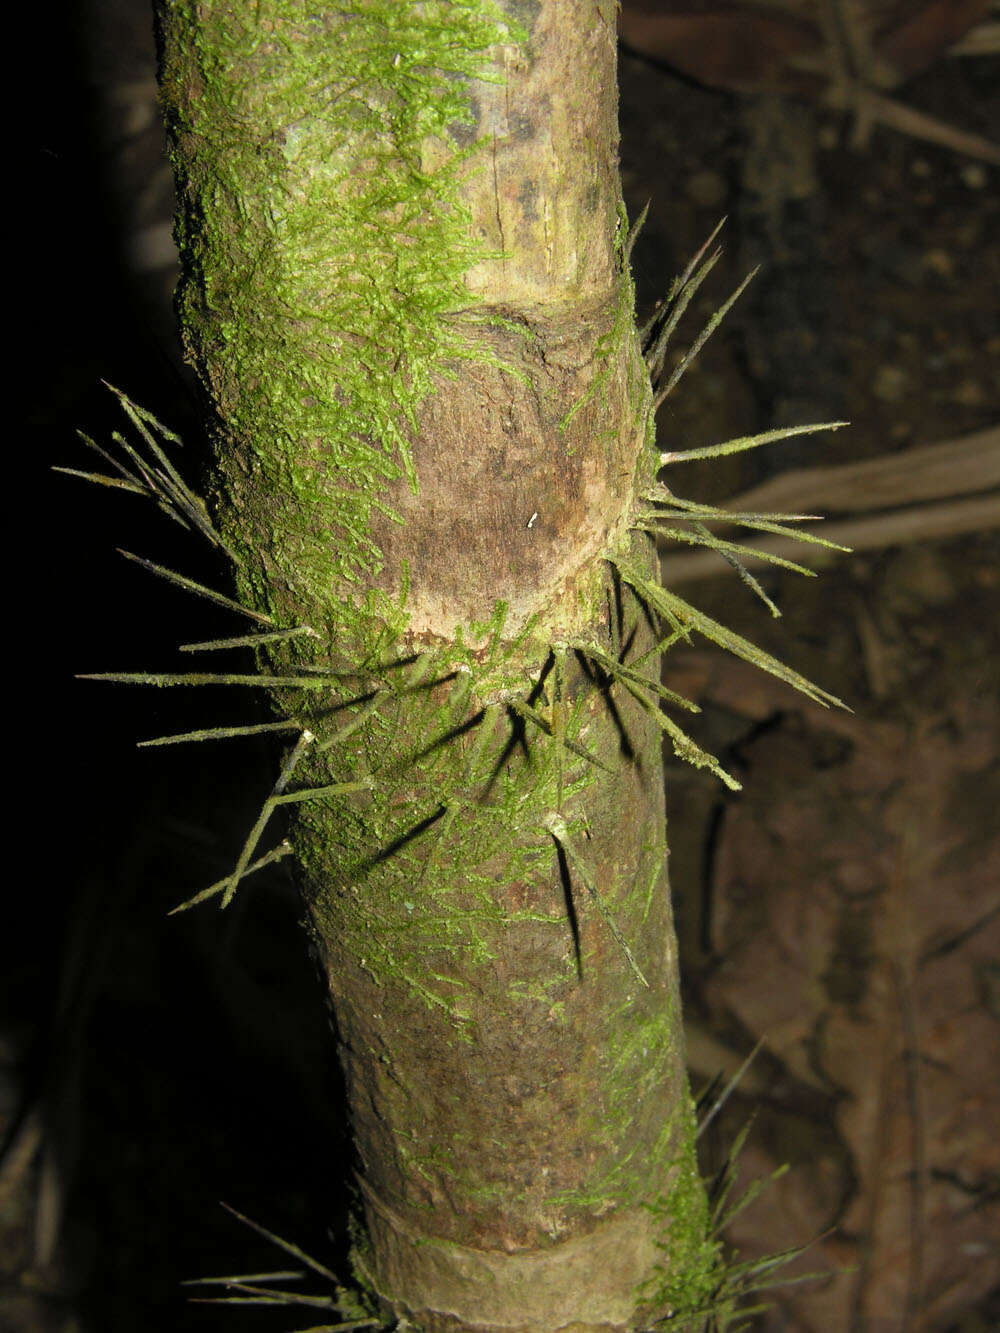 Image of bactris palm